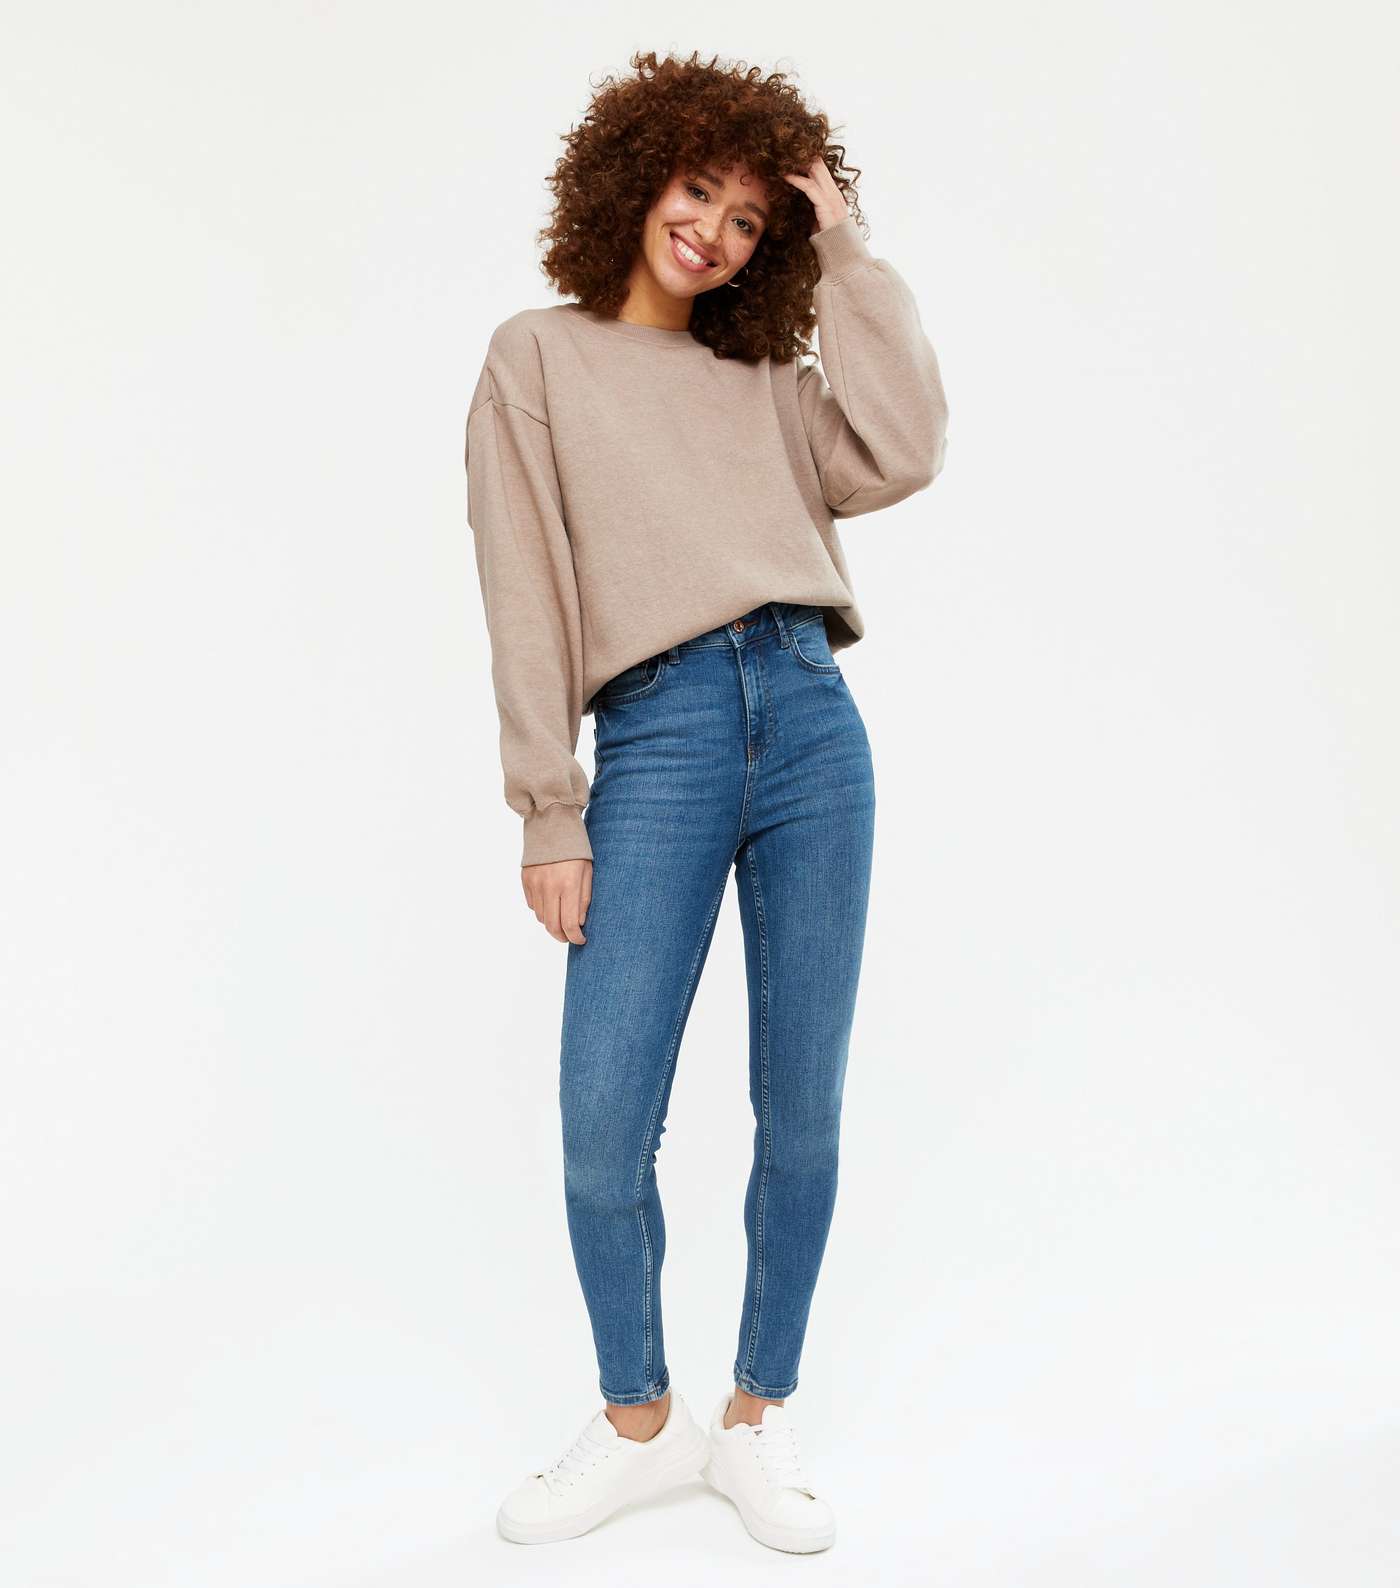 Blue 'Lift & Shape' Jenna Skinny Jeans Image 2